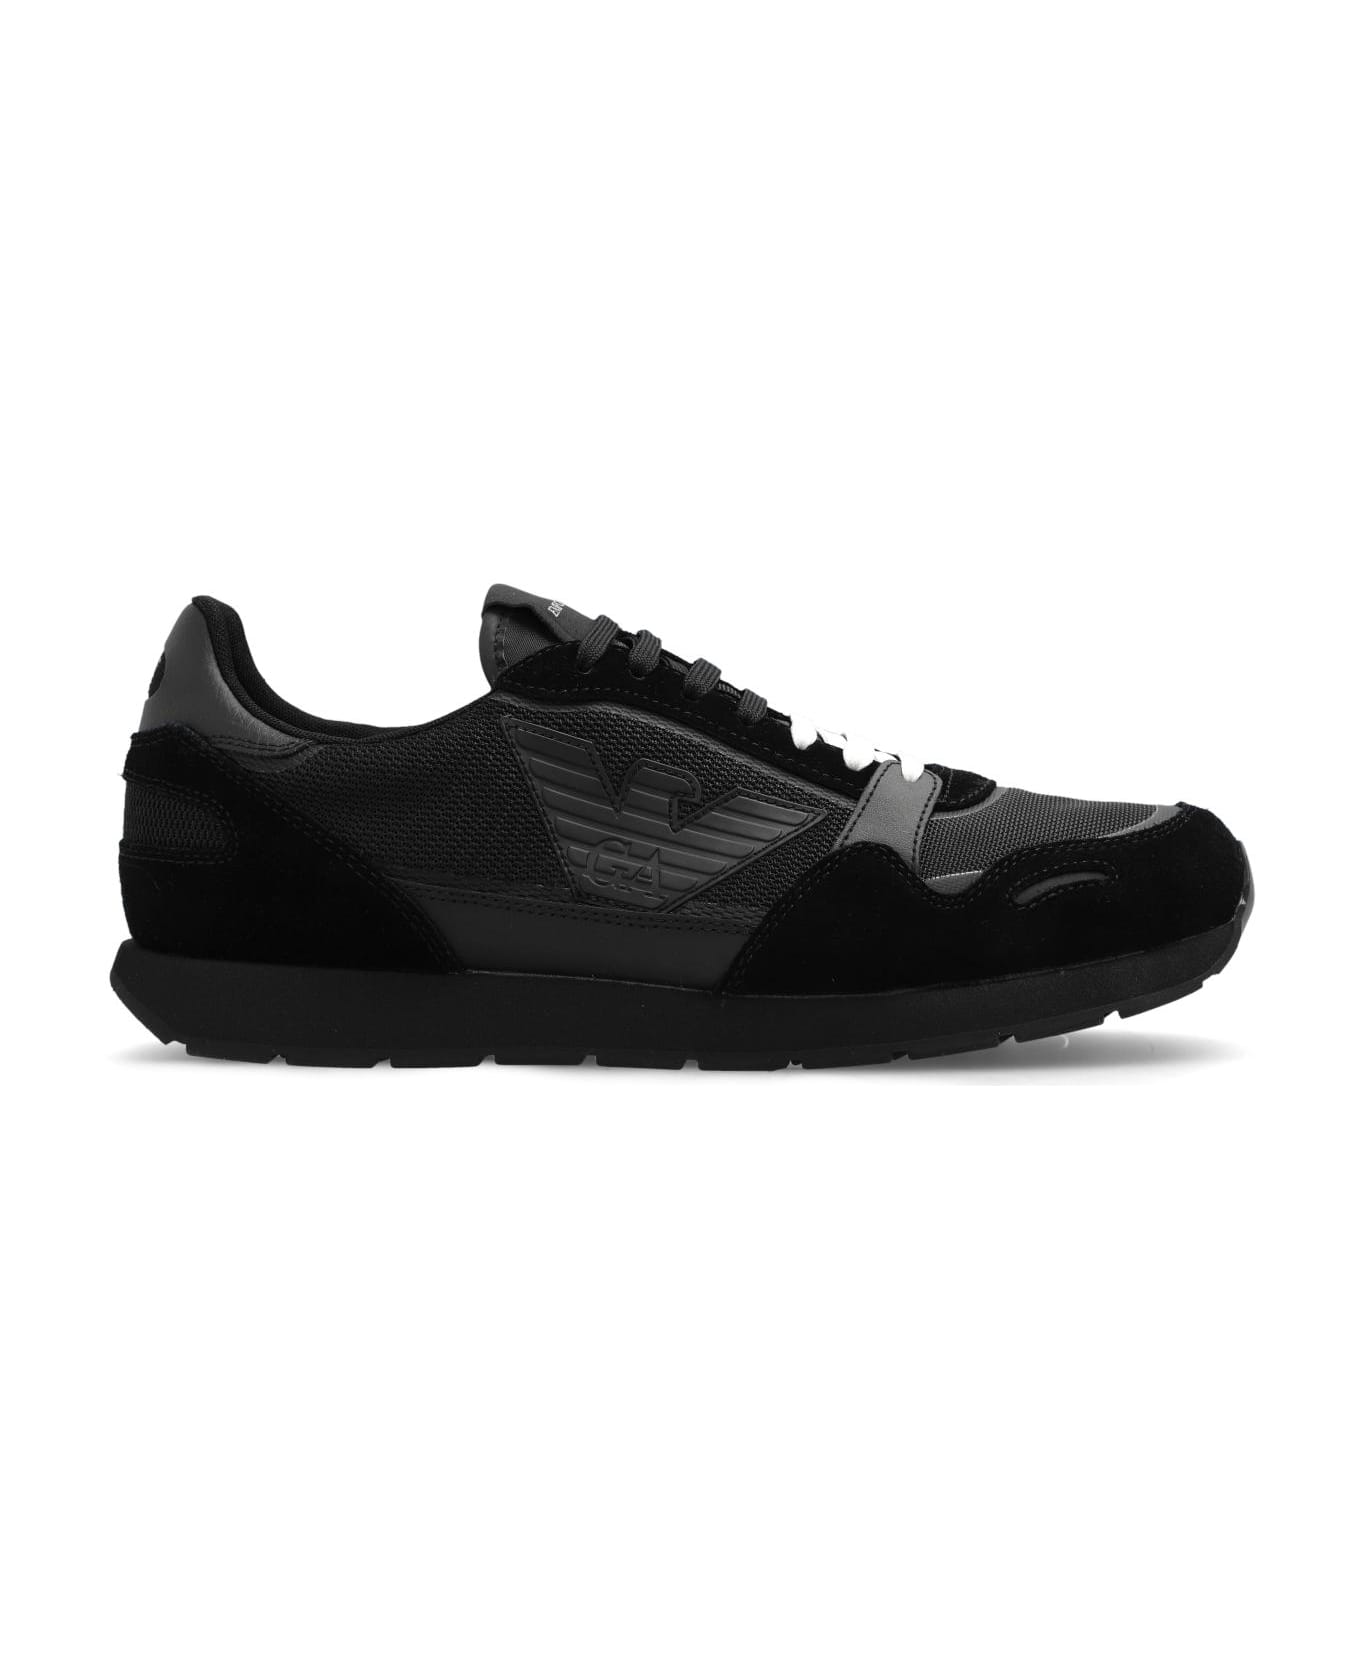 Emporio Armani Sneakers With Logo - Black